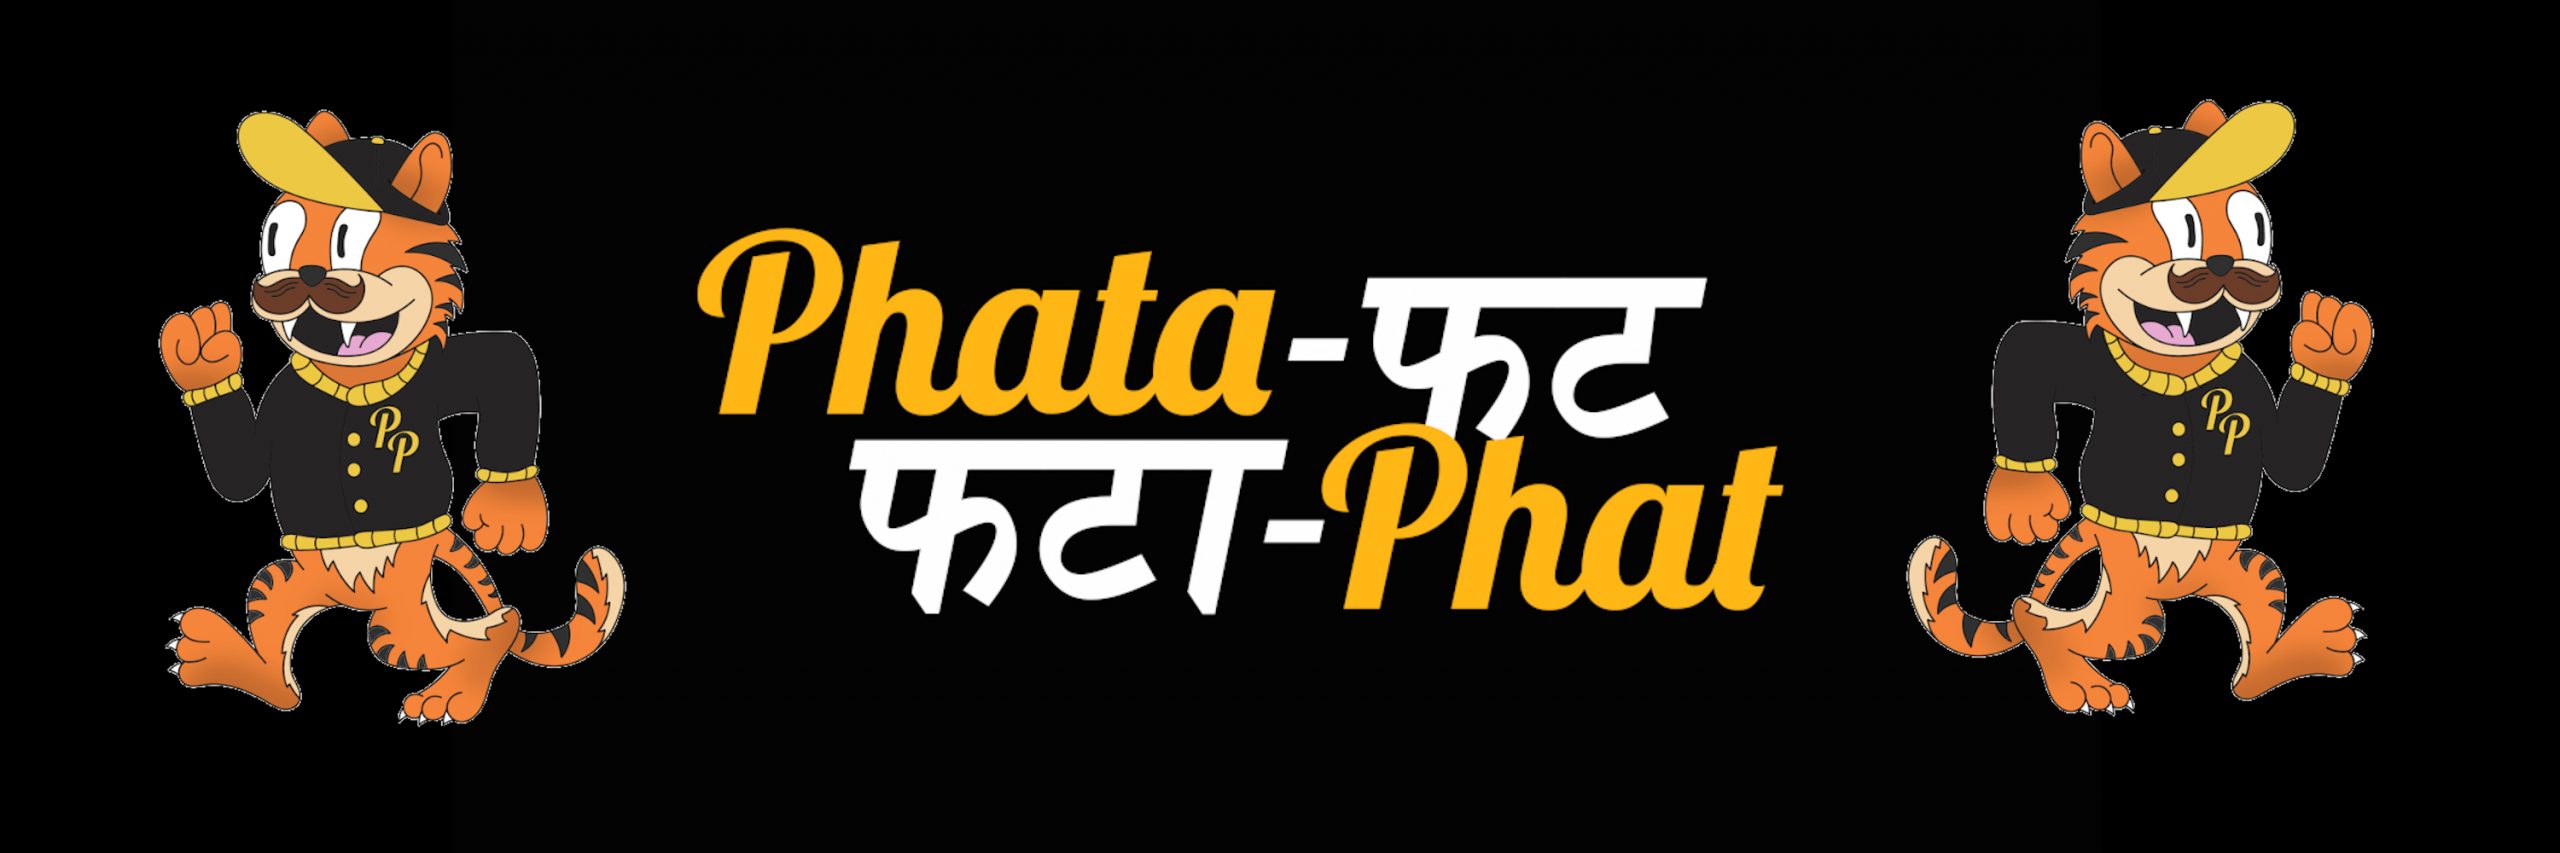 Phata-Phat